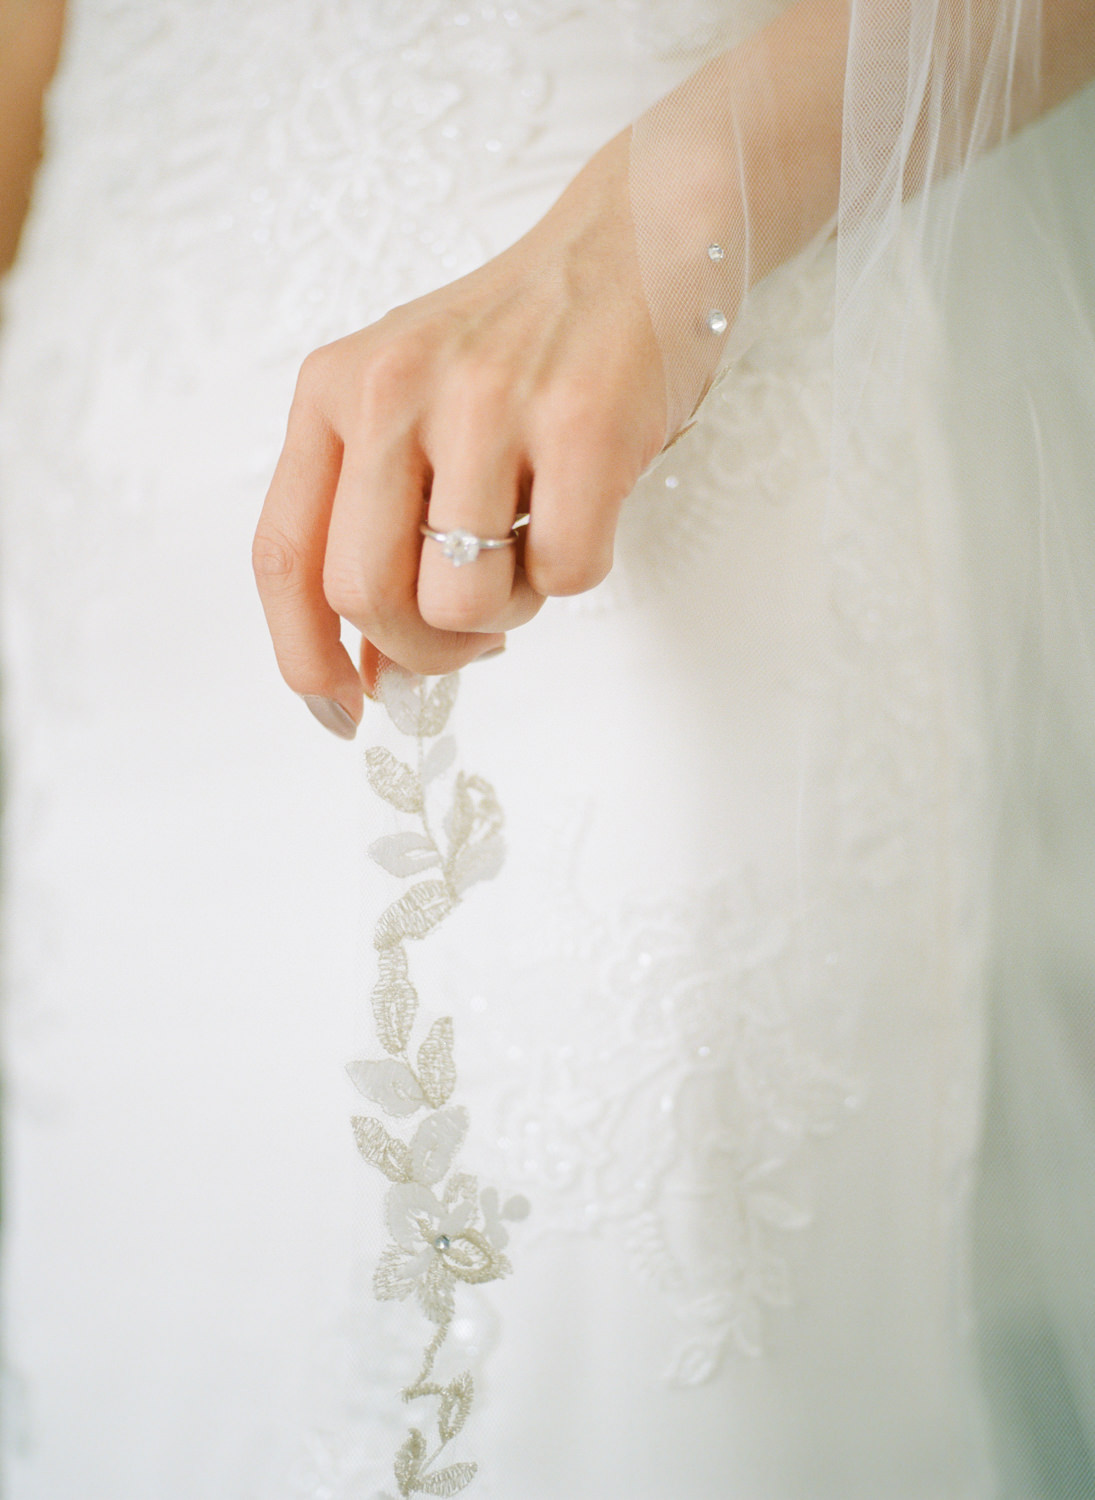 Bridal veil and ring detail; St. Louis fine art film wedding photographer Erica Robnett Photography